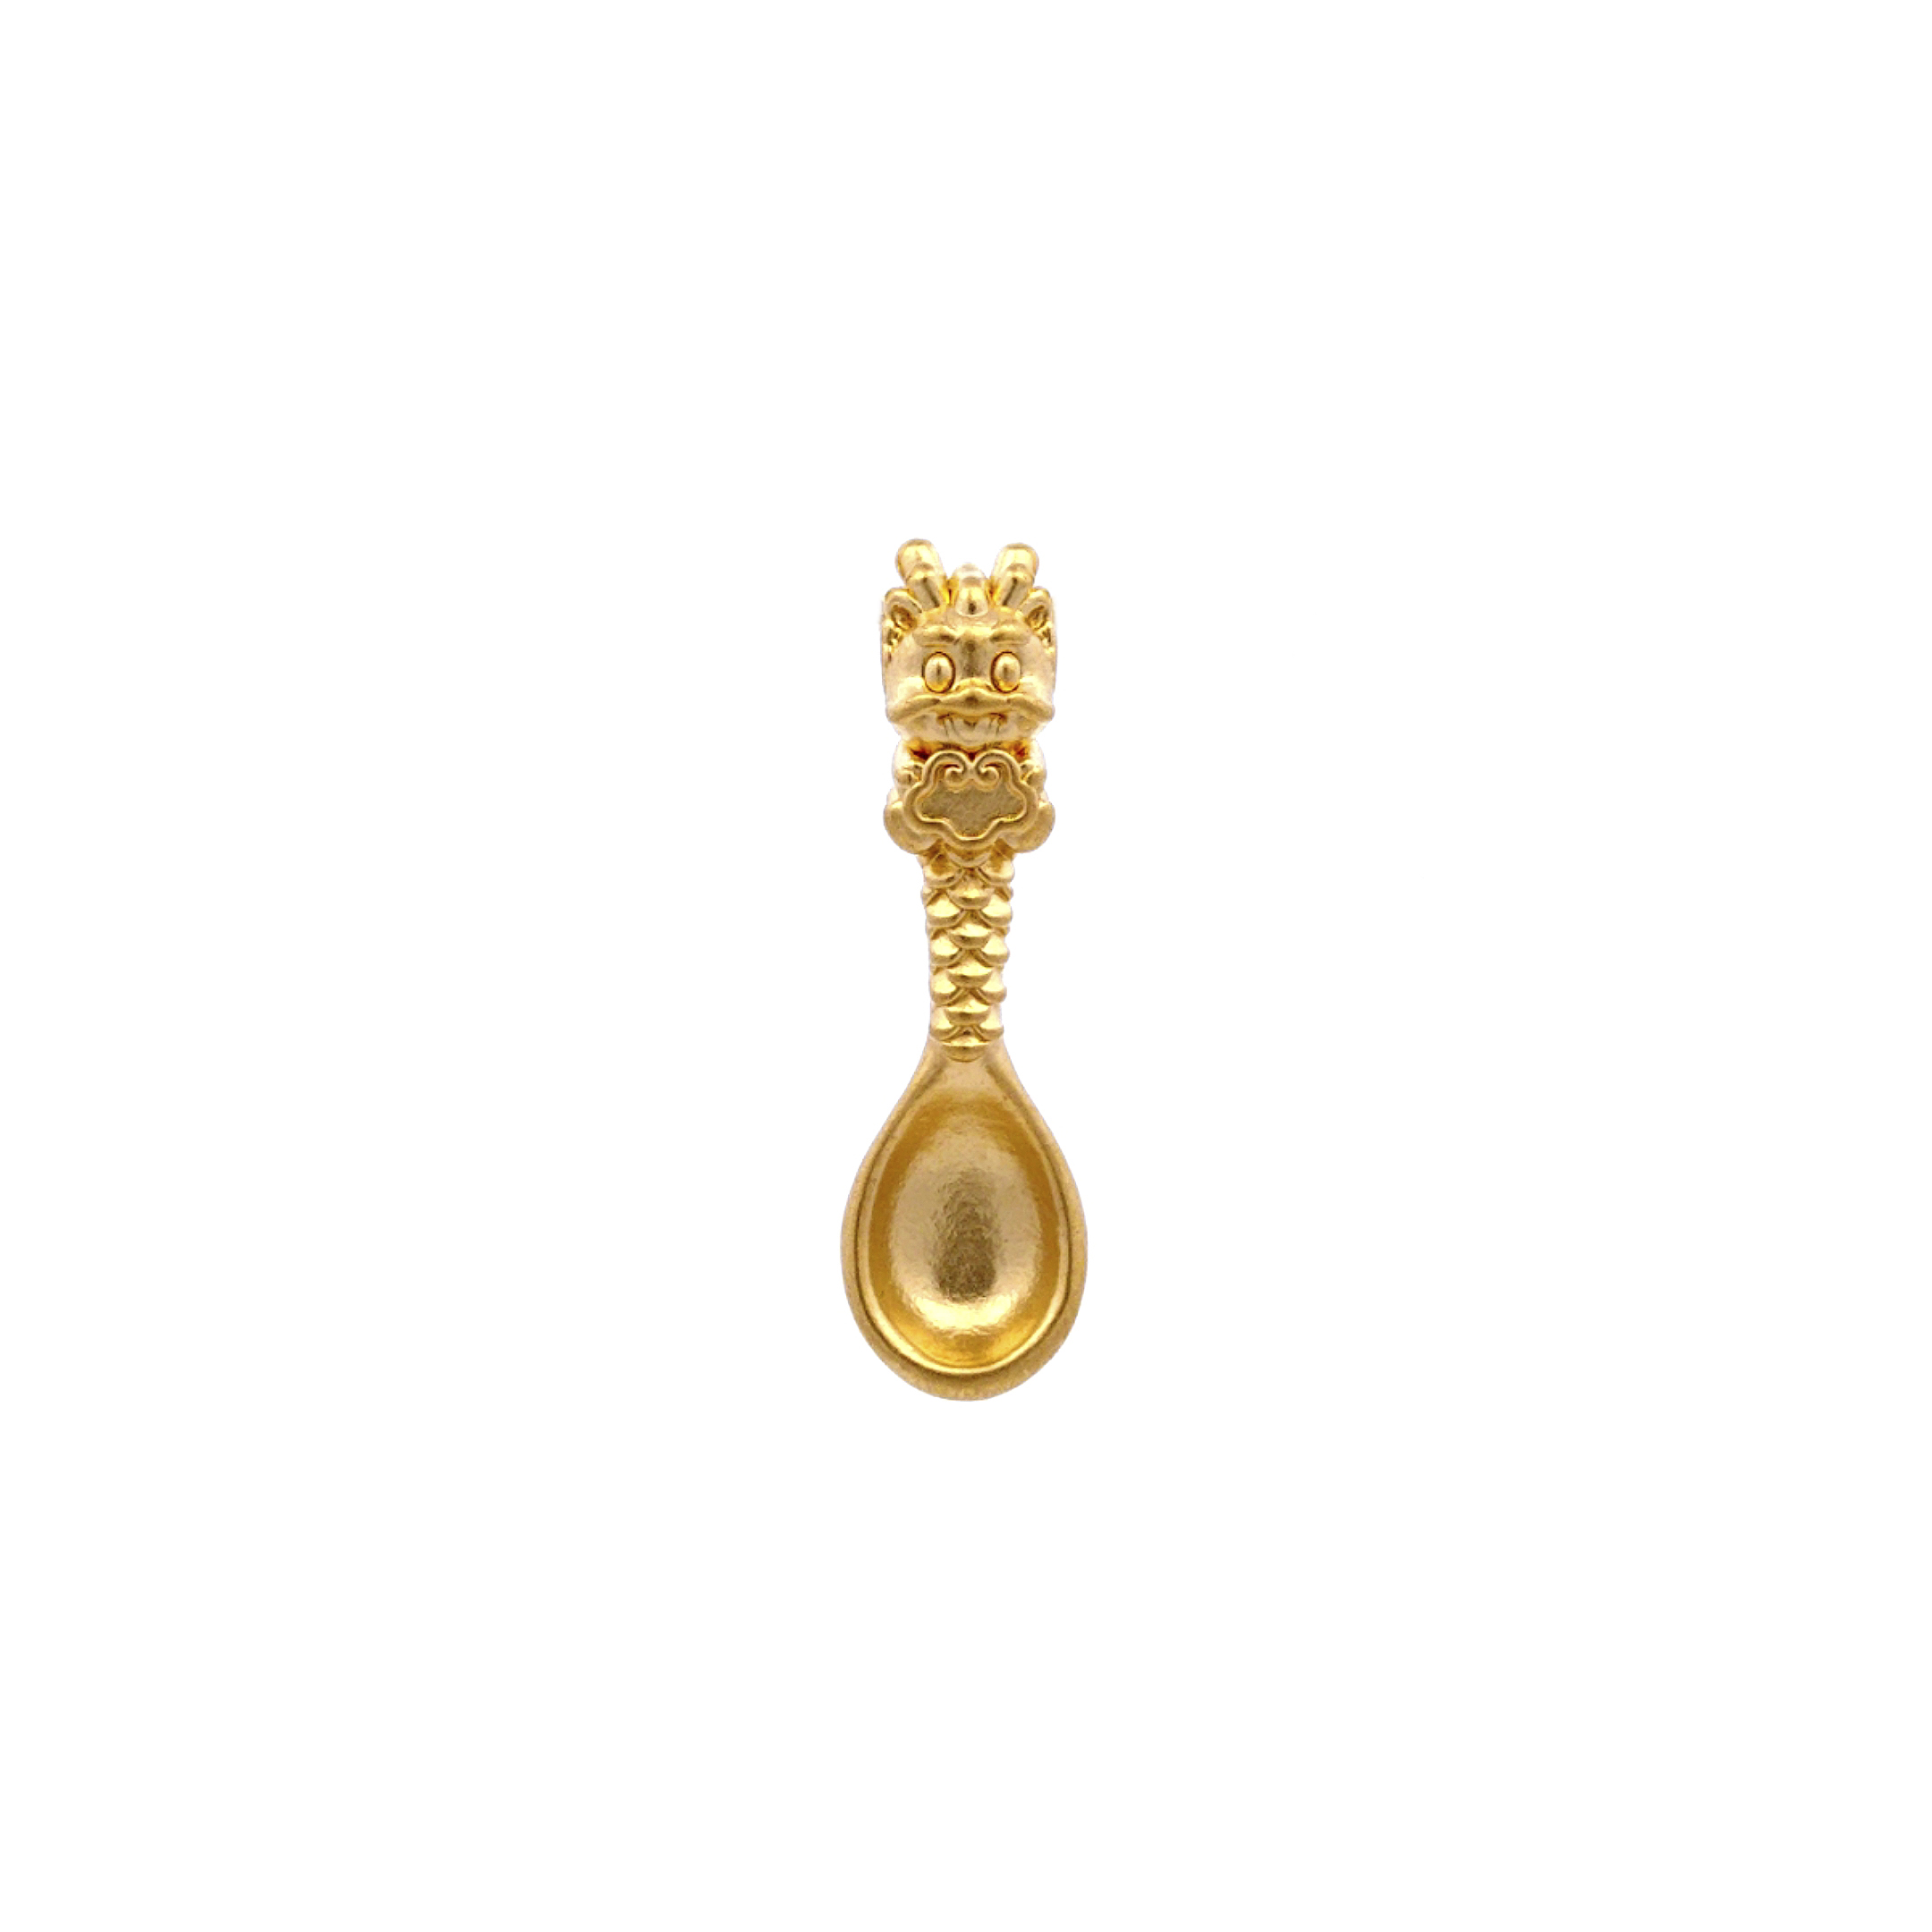 TIANSI 999 (24K) Gold Dragon Key Pendant